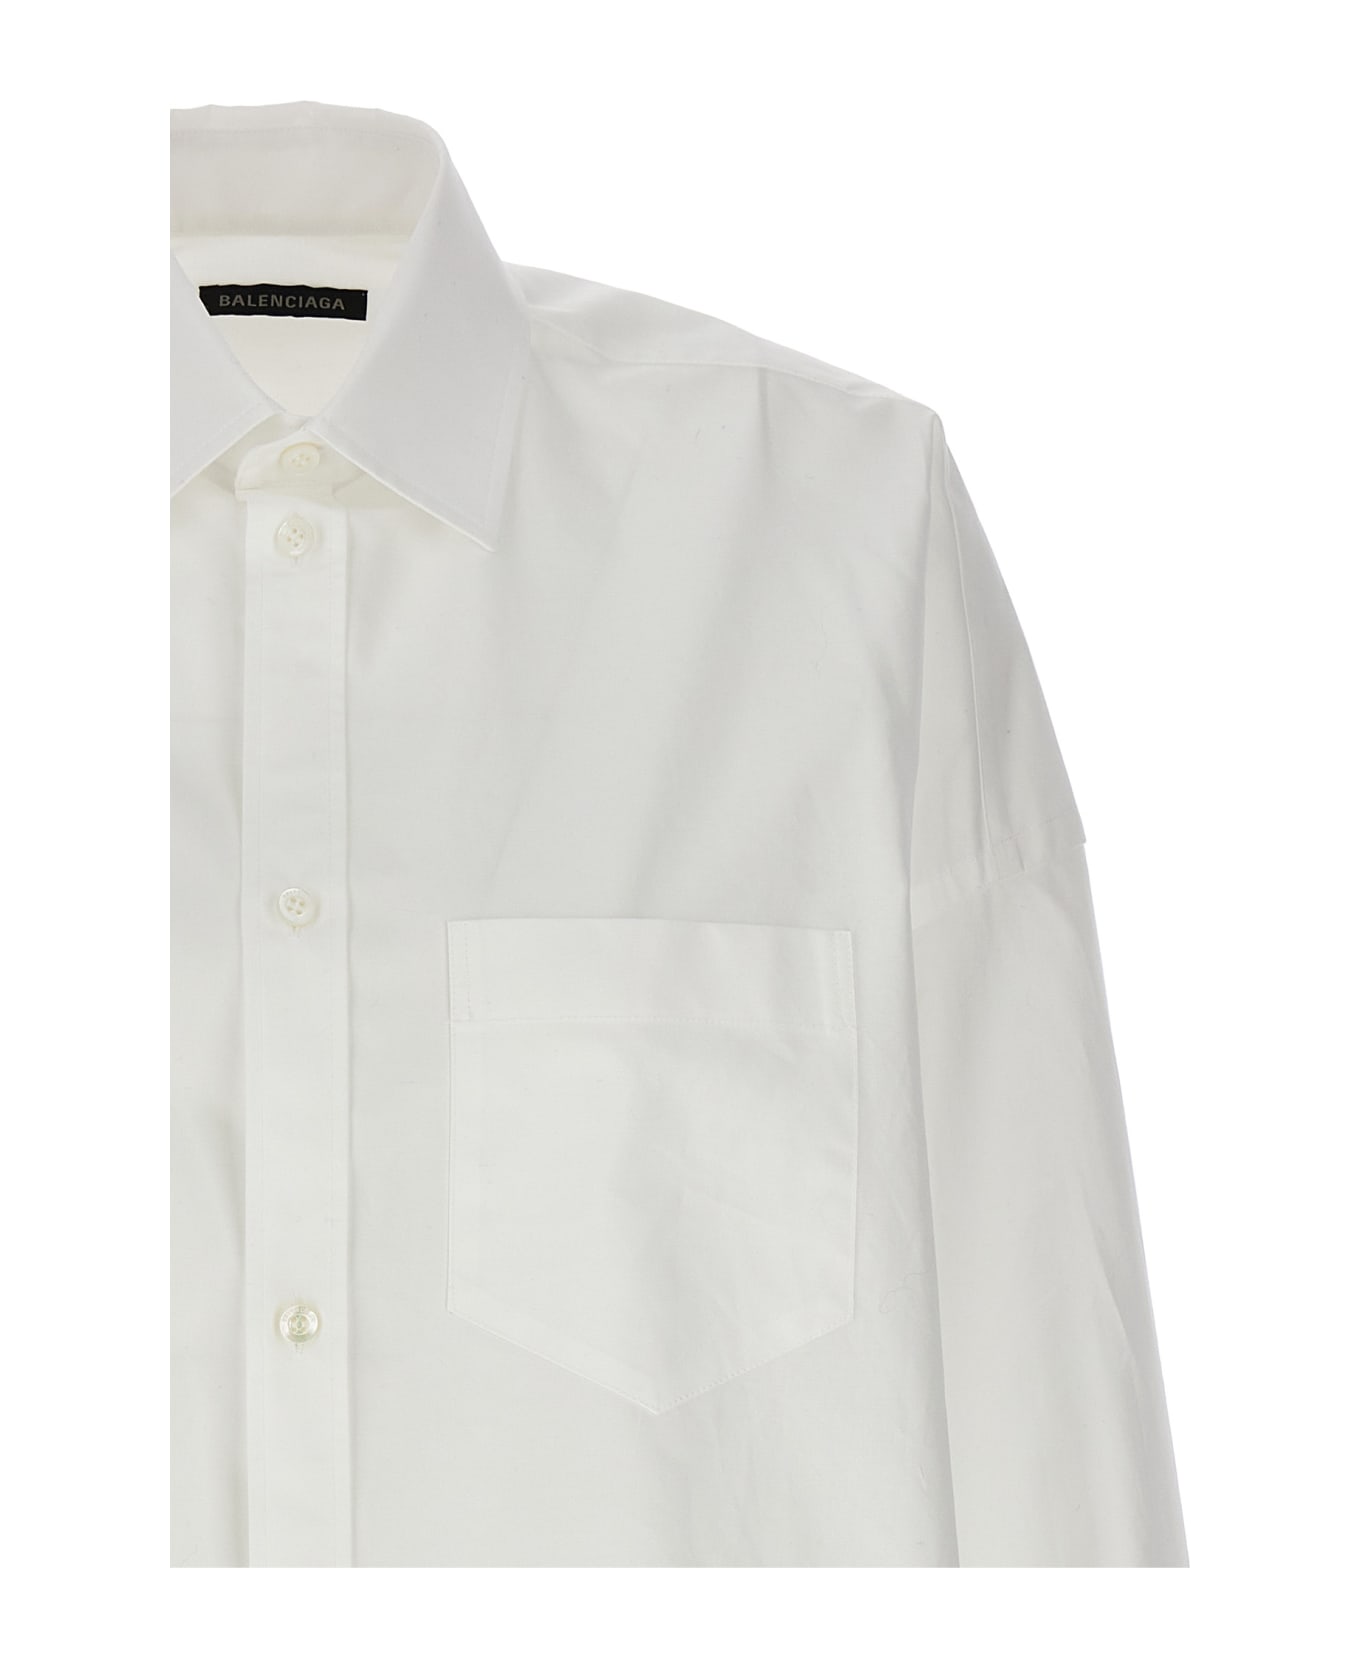 Balenciaga Rhinestone Logo Shirt - White